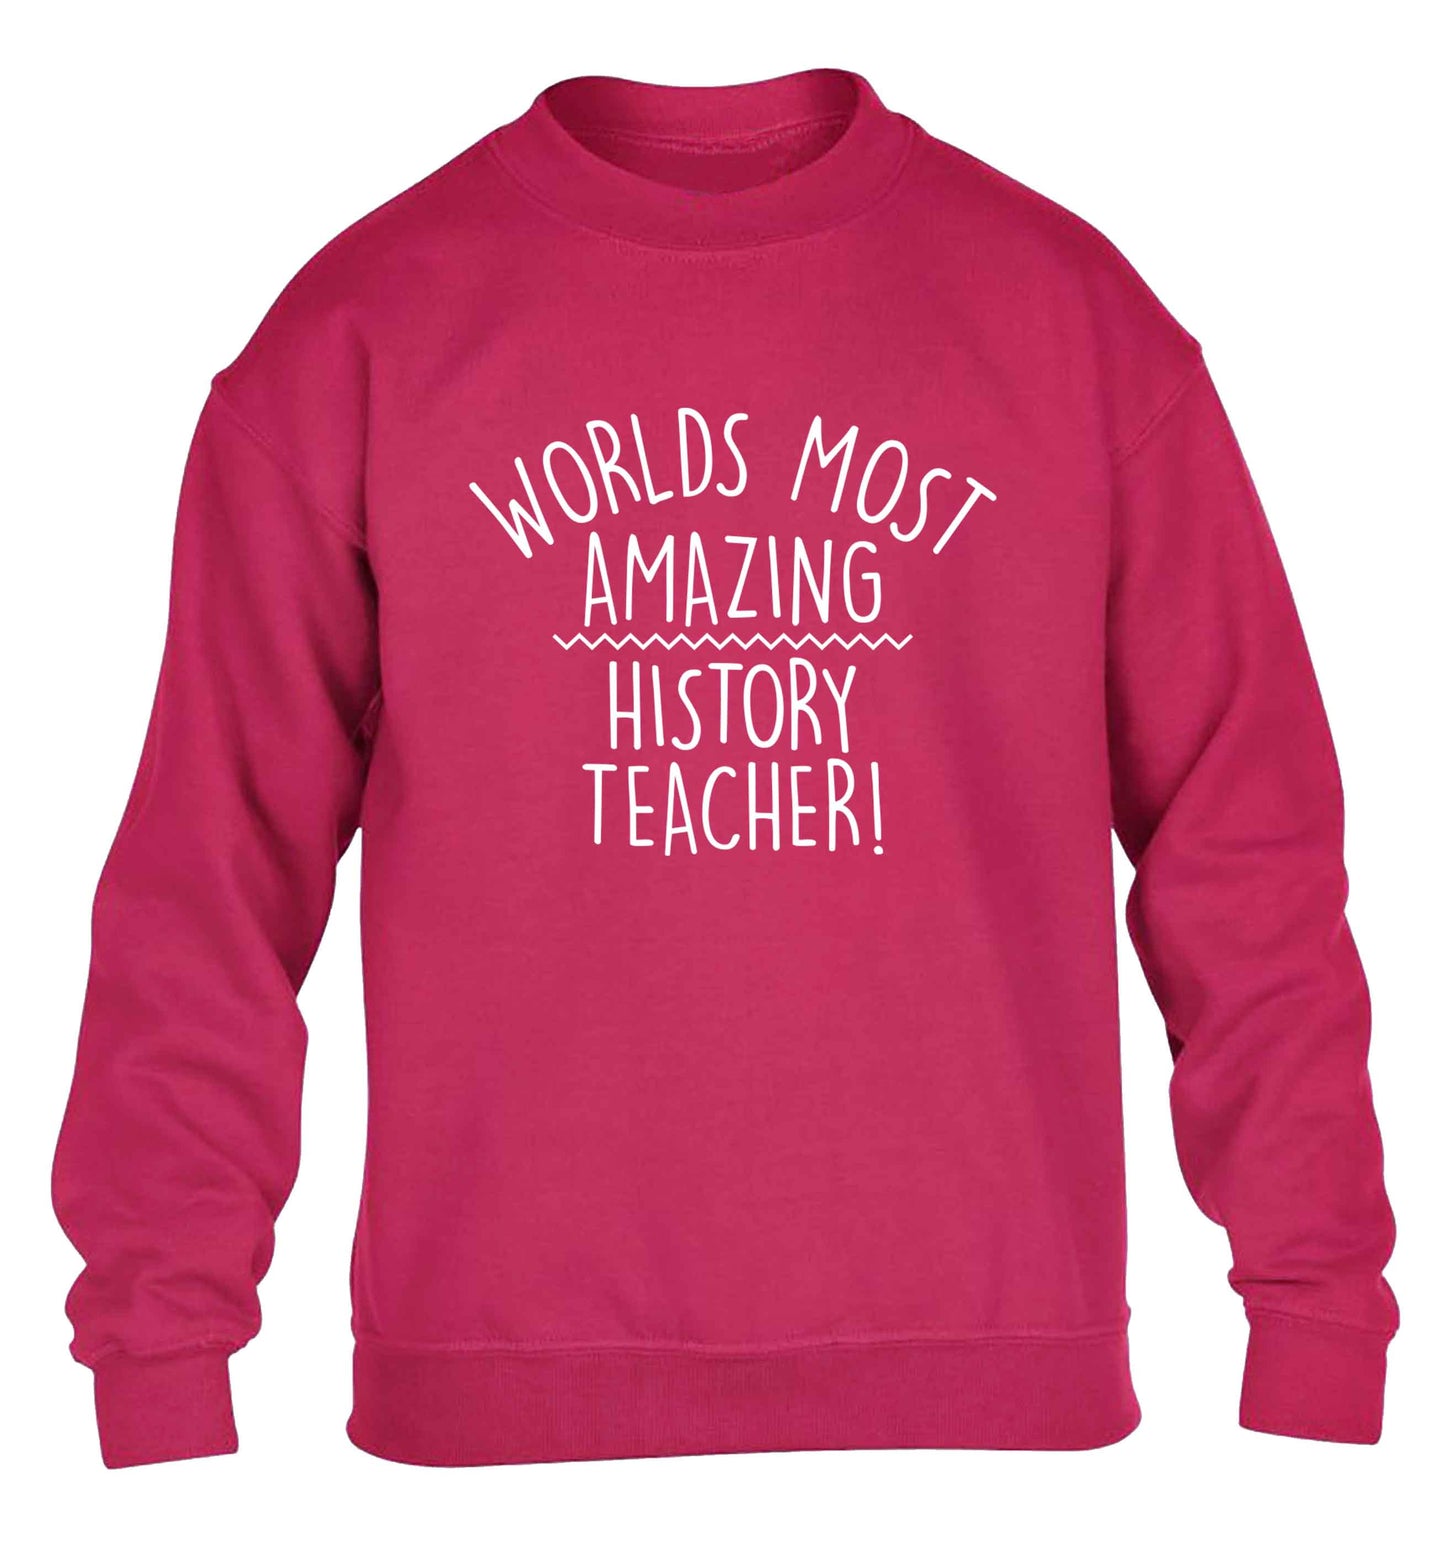 Worlds most amazing History teacher children's pink sweater 12-13 Years